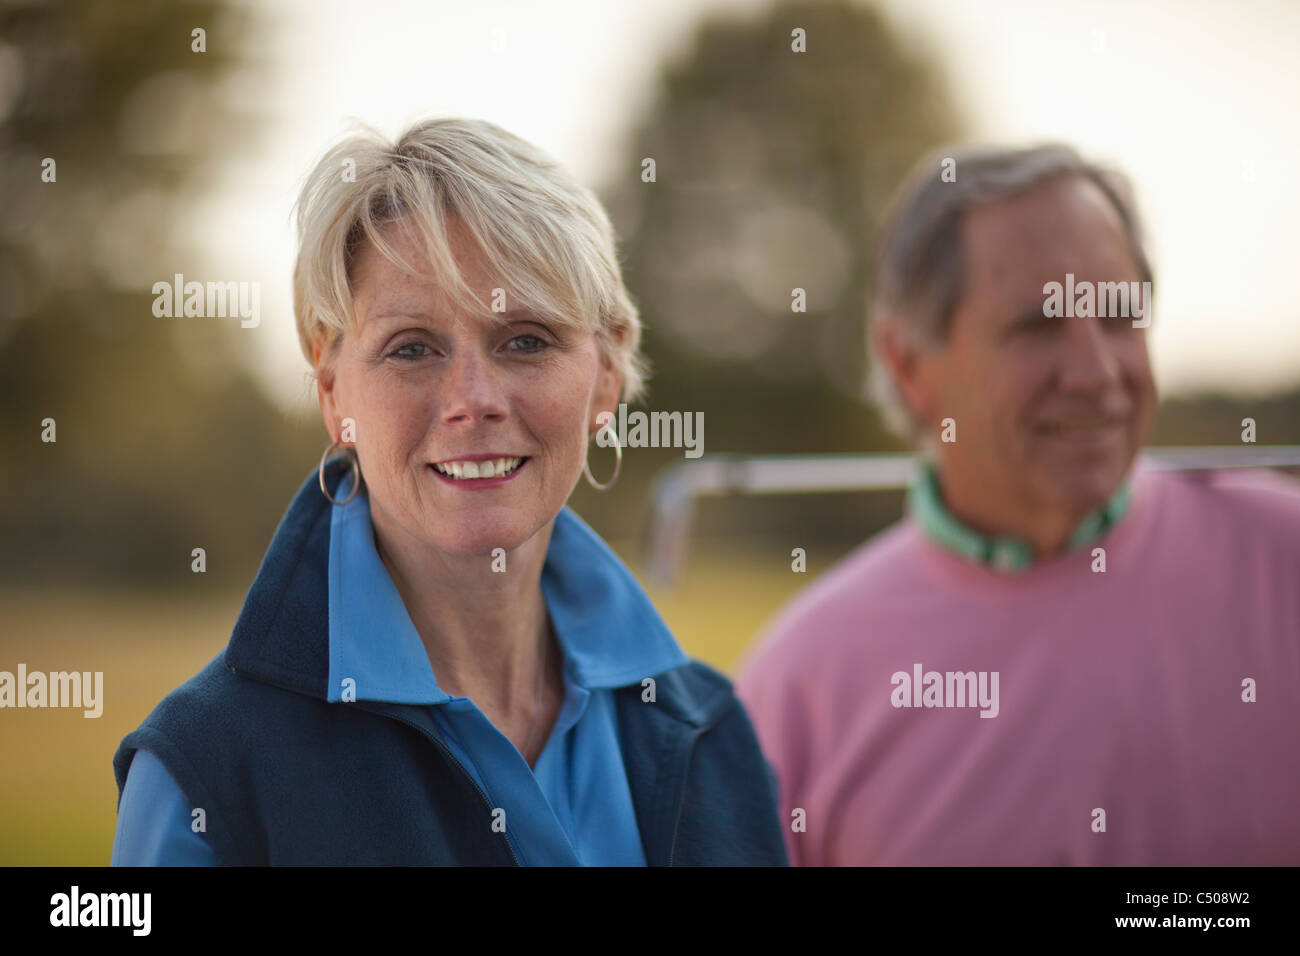 Caucasian couple standing on golf course Banque D'Images